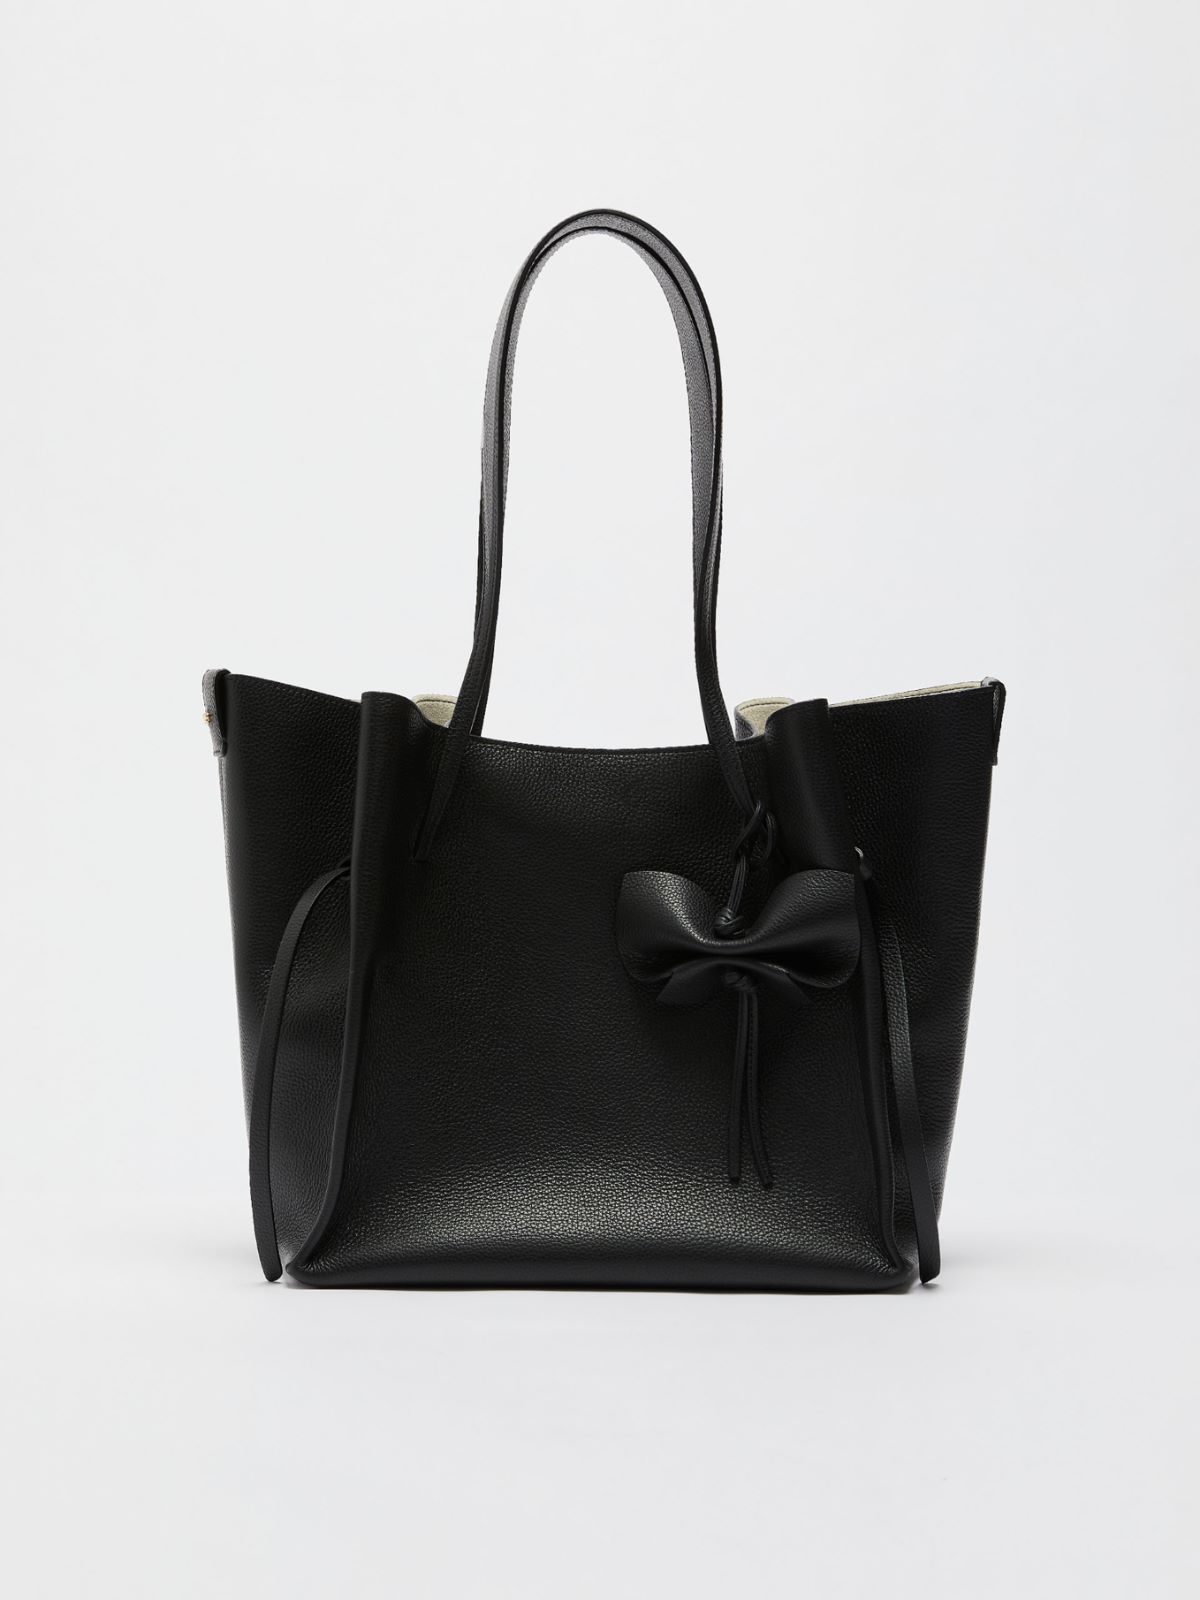 Leather shopping tote, black | Weekend Max Mara